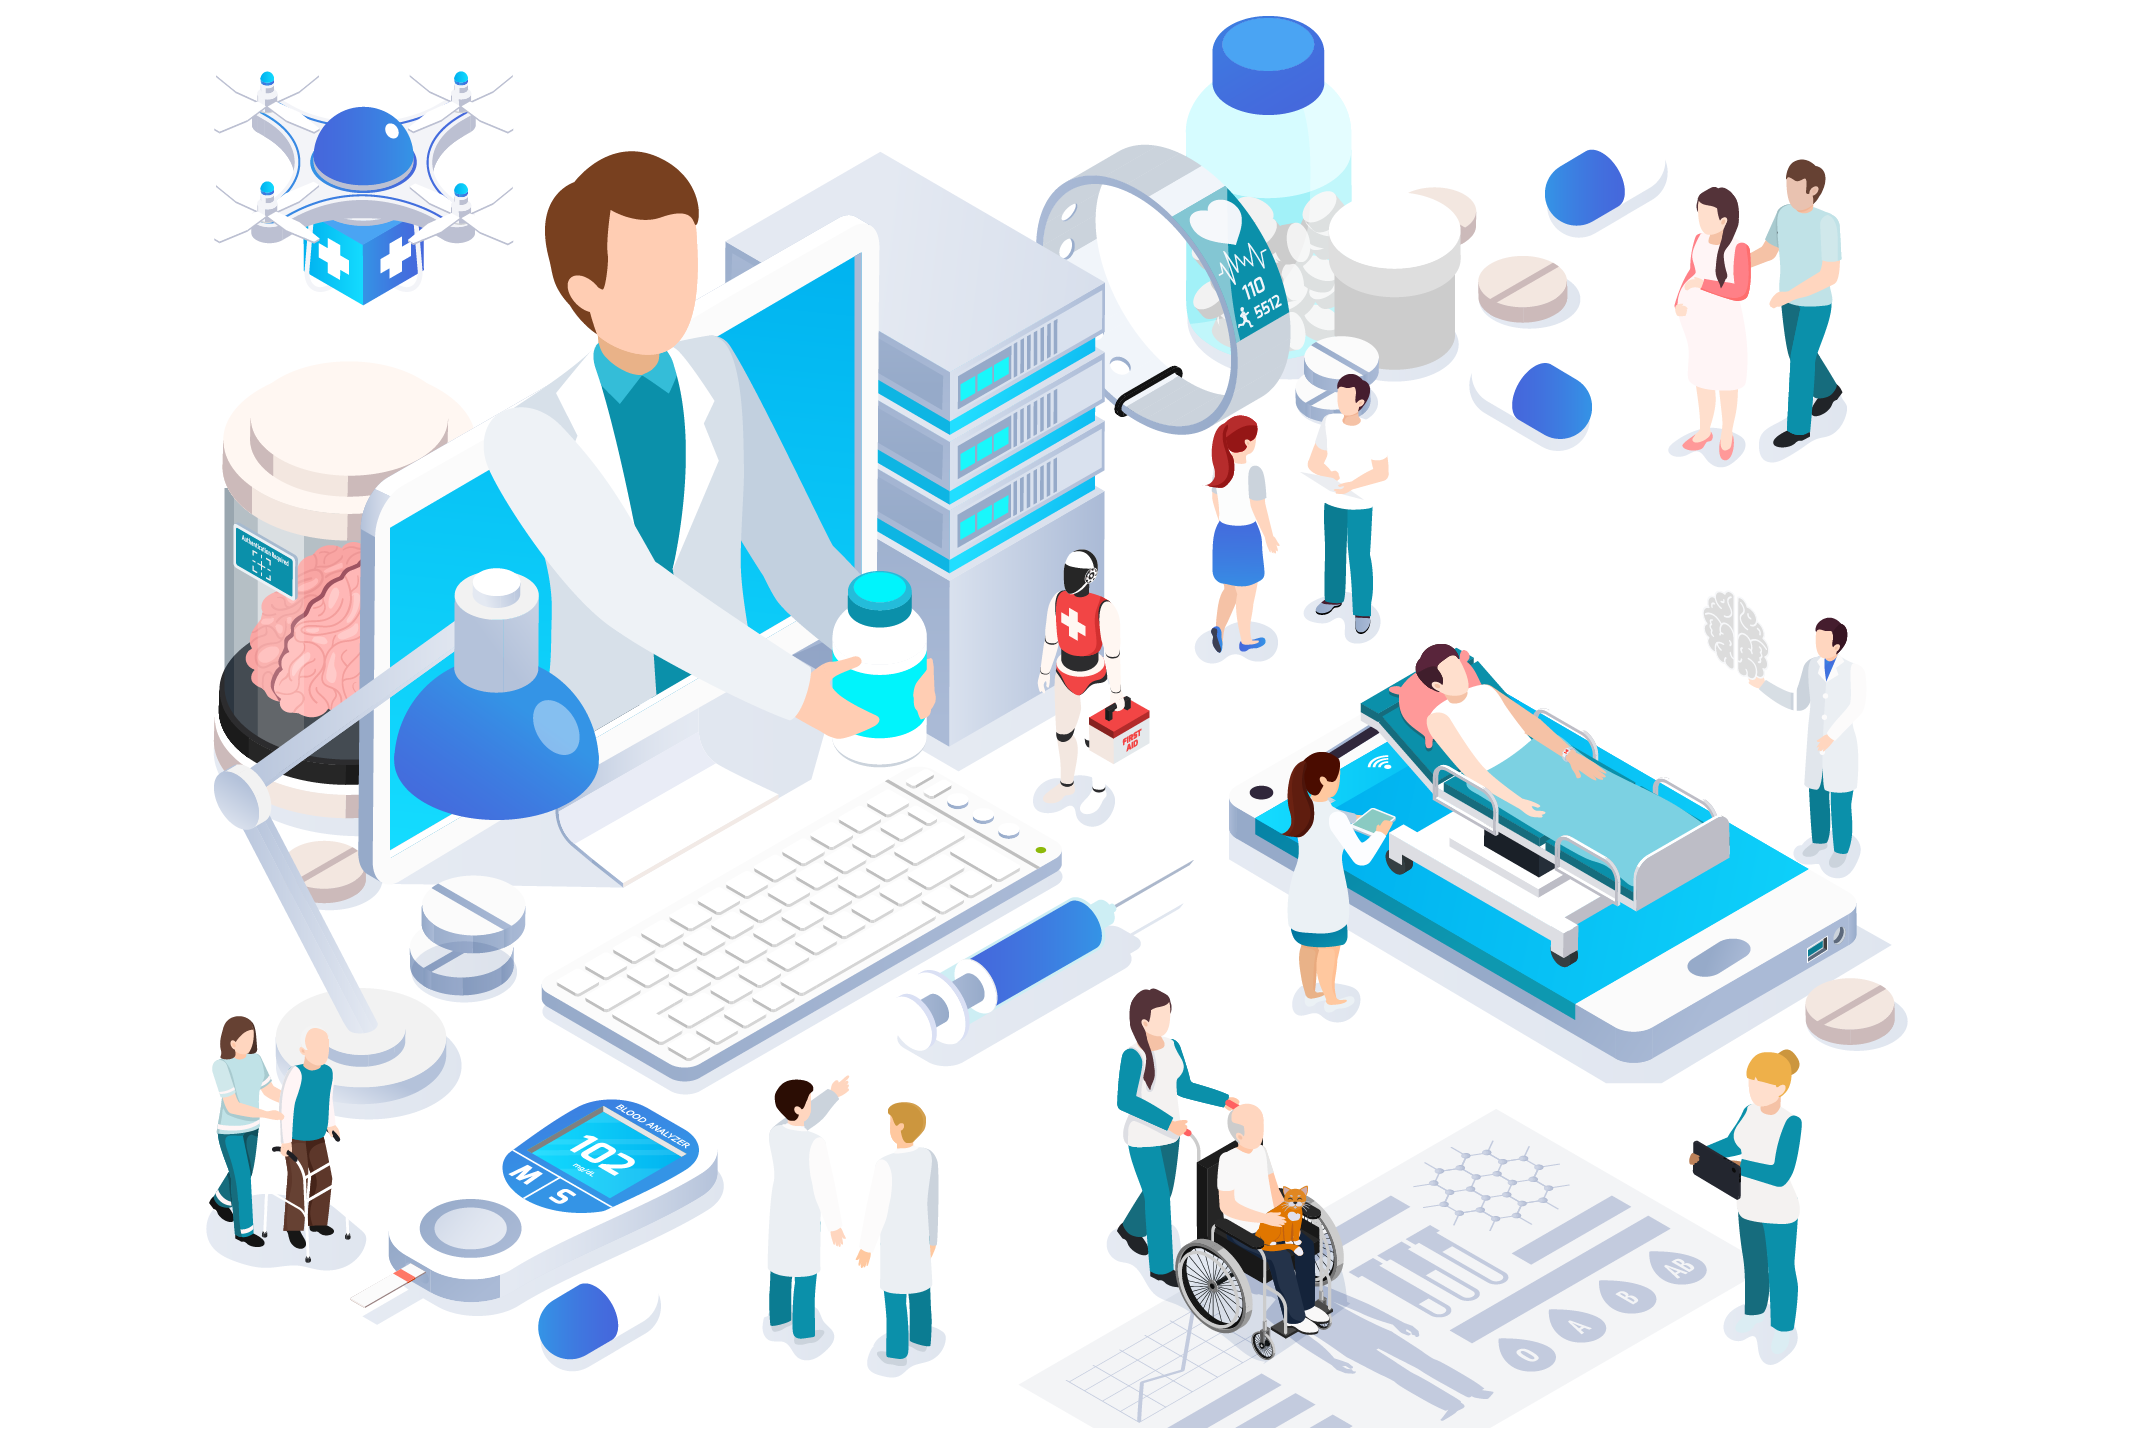 data science in healthcare